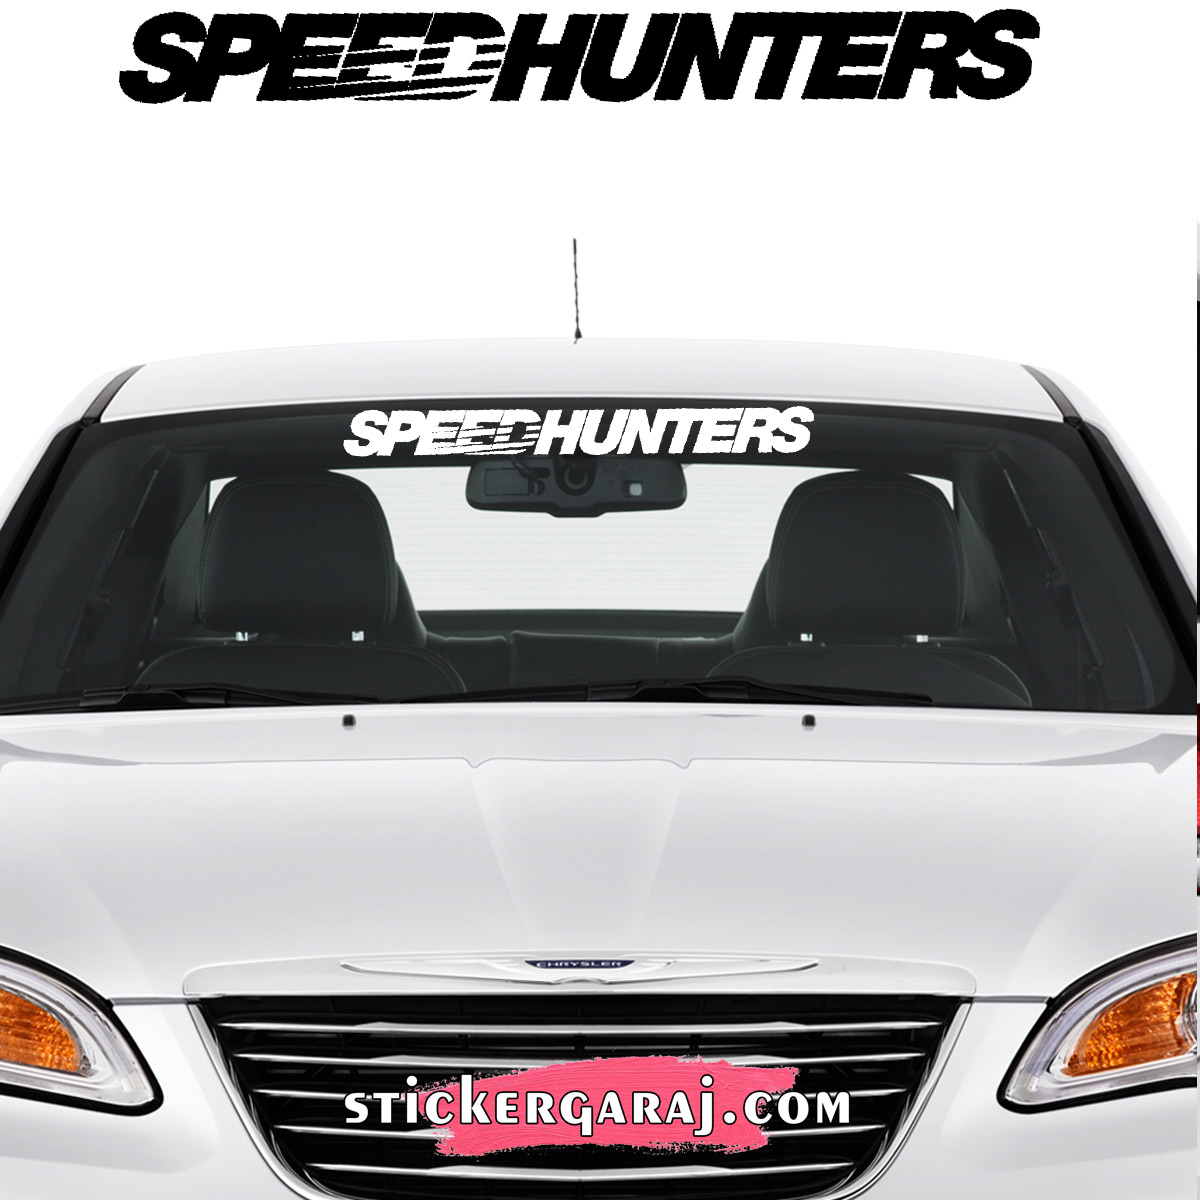 Opel oto sticker - Opel cam sticker - speedhunters